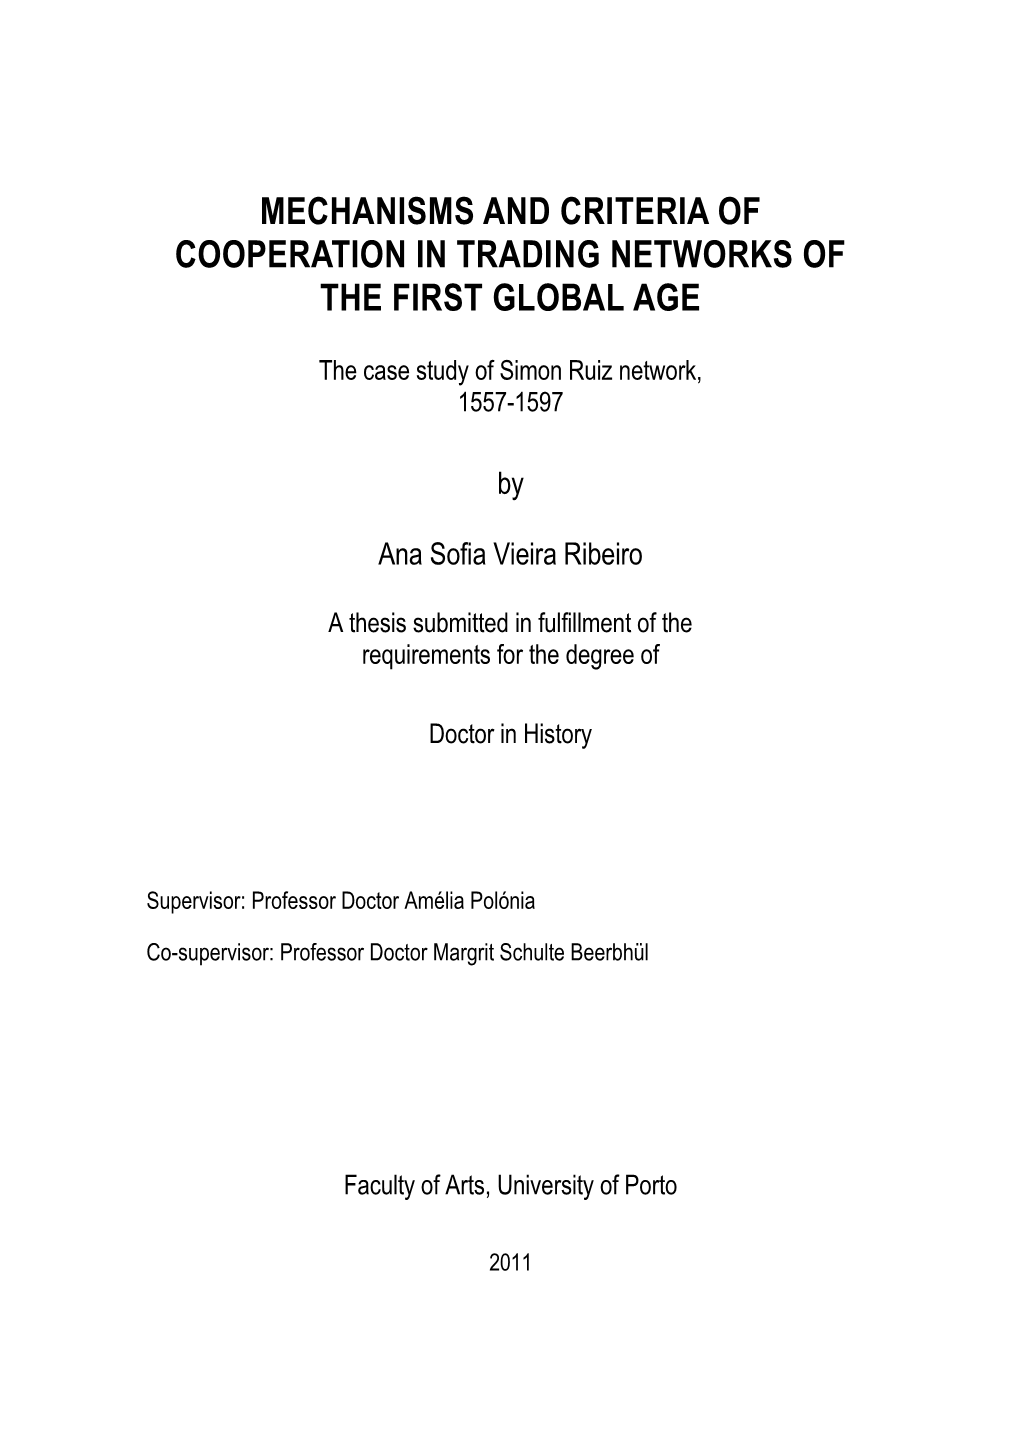 The Case Study of Simon Ruiz Network, 1557-1597